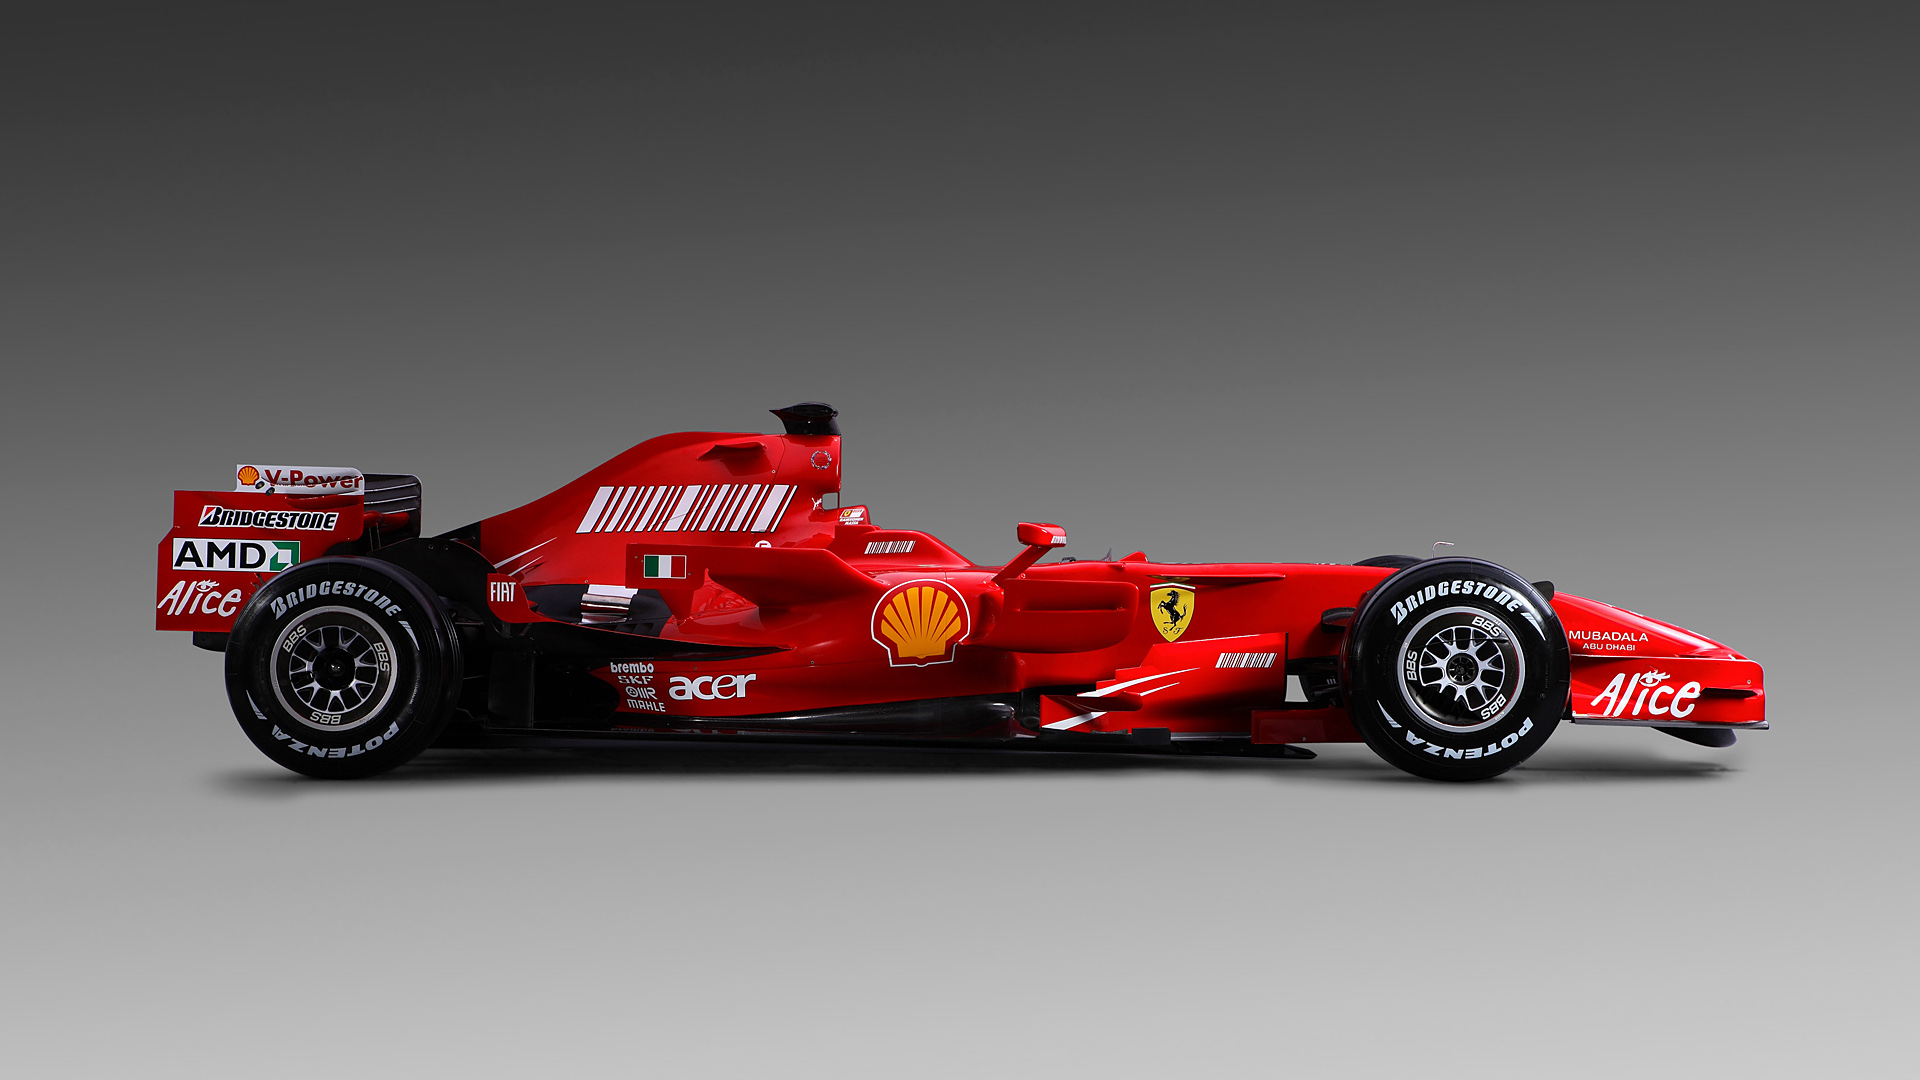  2008 Ferrari F2008 Wallpaper.